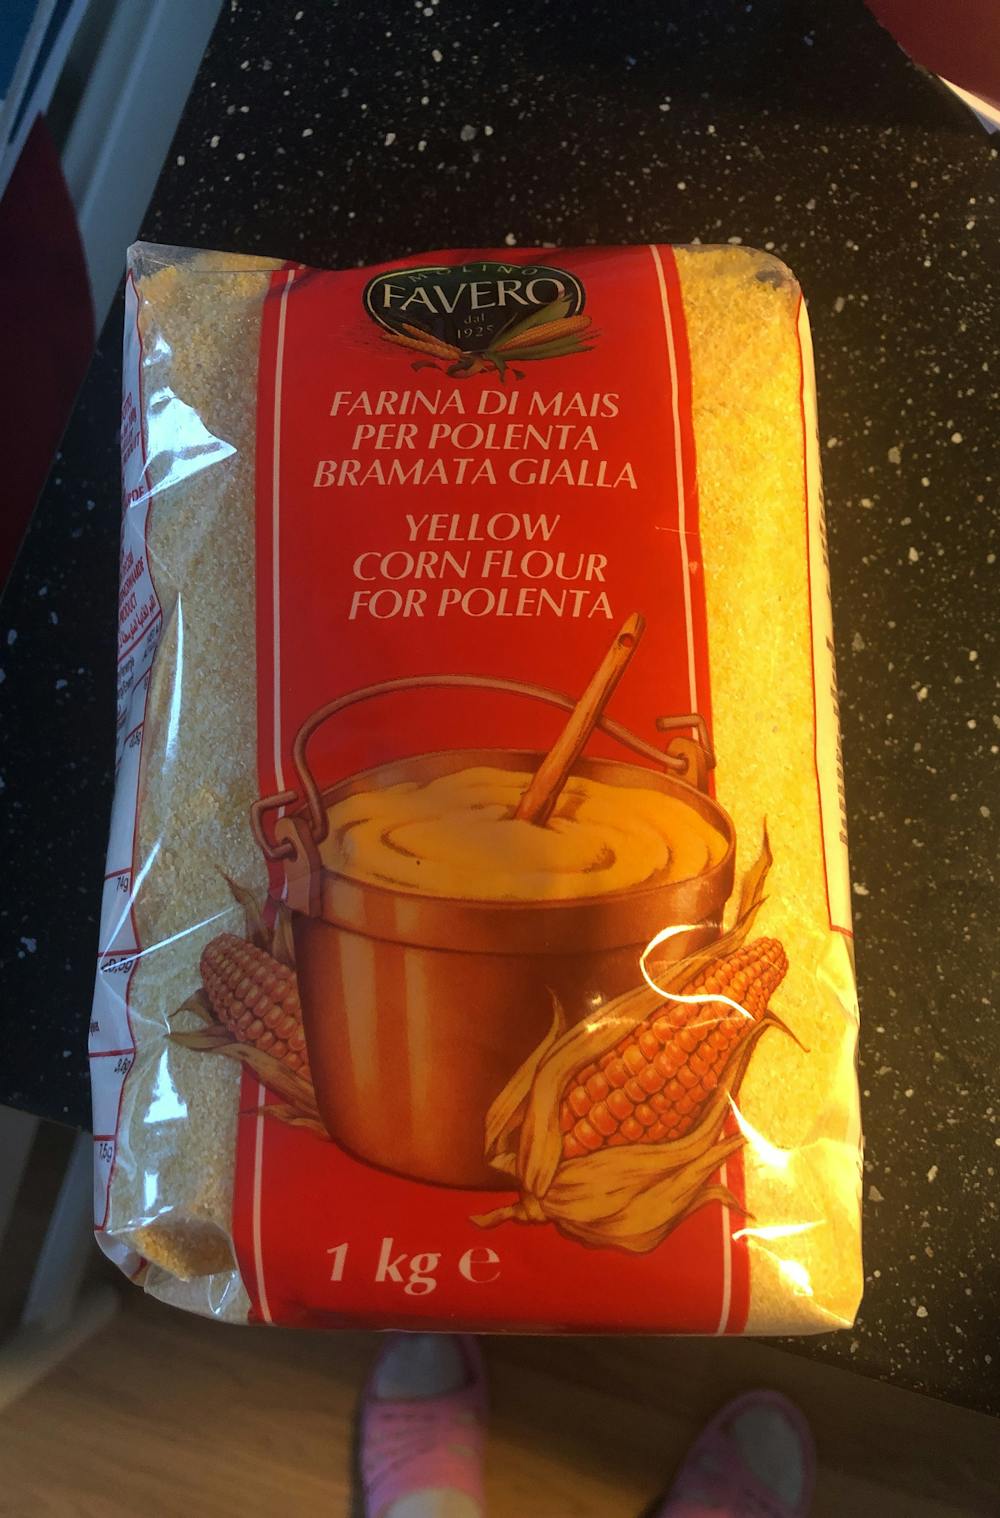 Yellow corn flour for pollenta, Favero